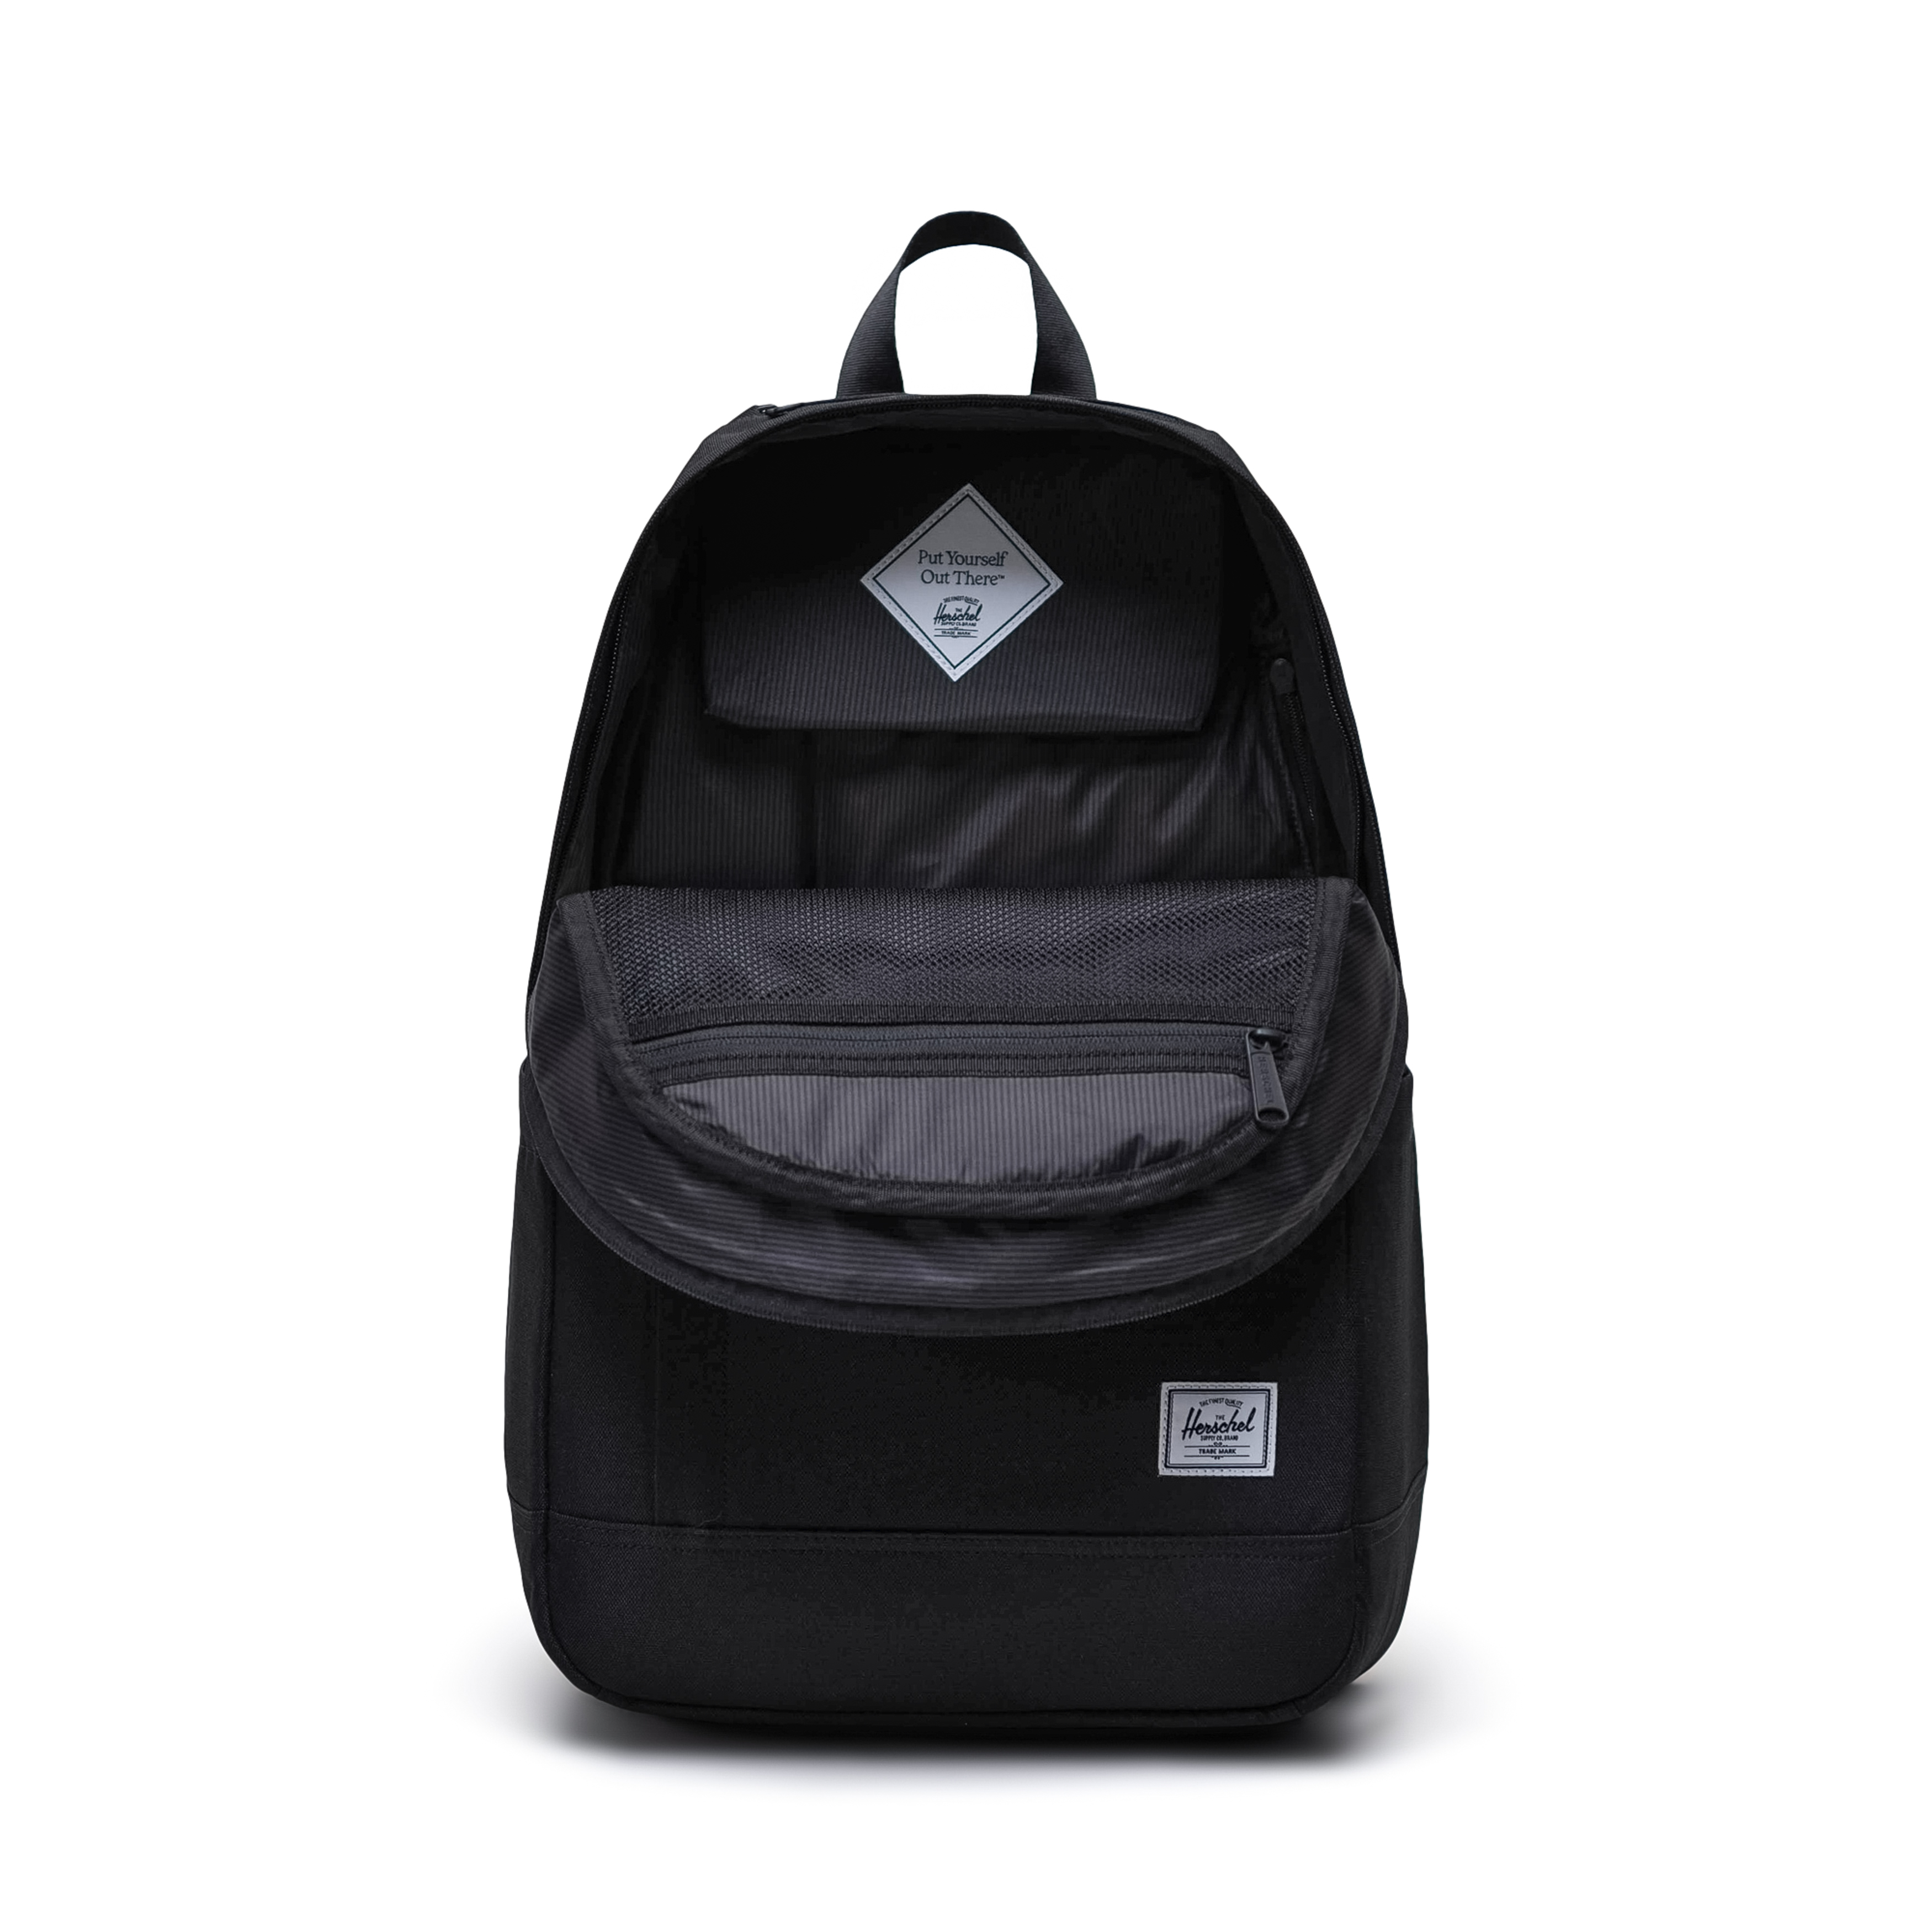 Seymour Backpack | Herschel Supply Company